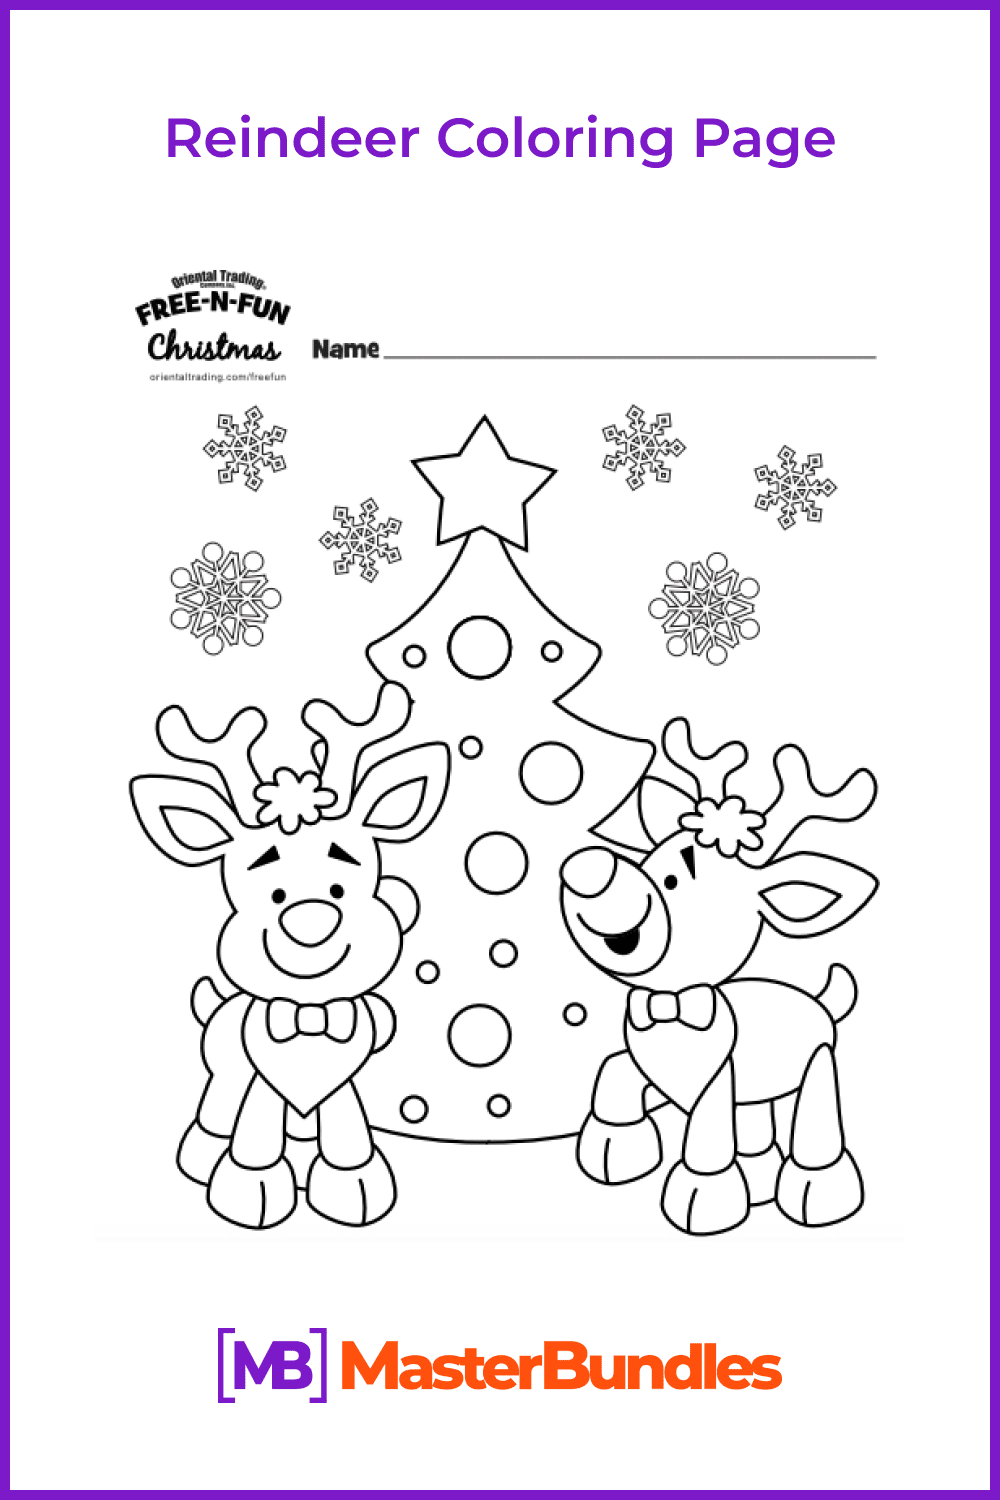 3 Reindeer Coloring Page pinterest